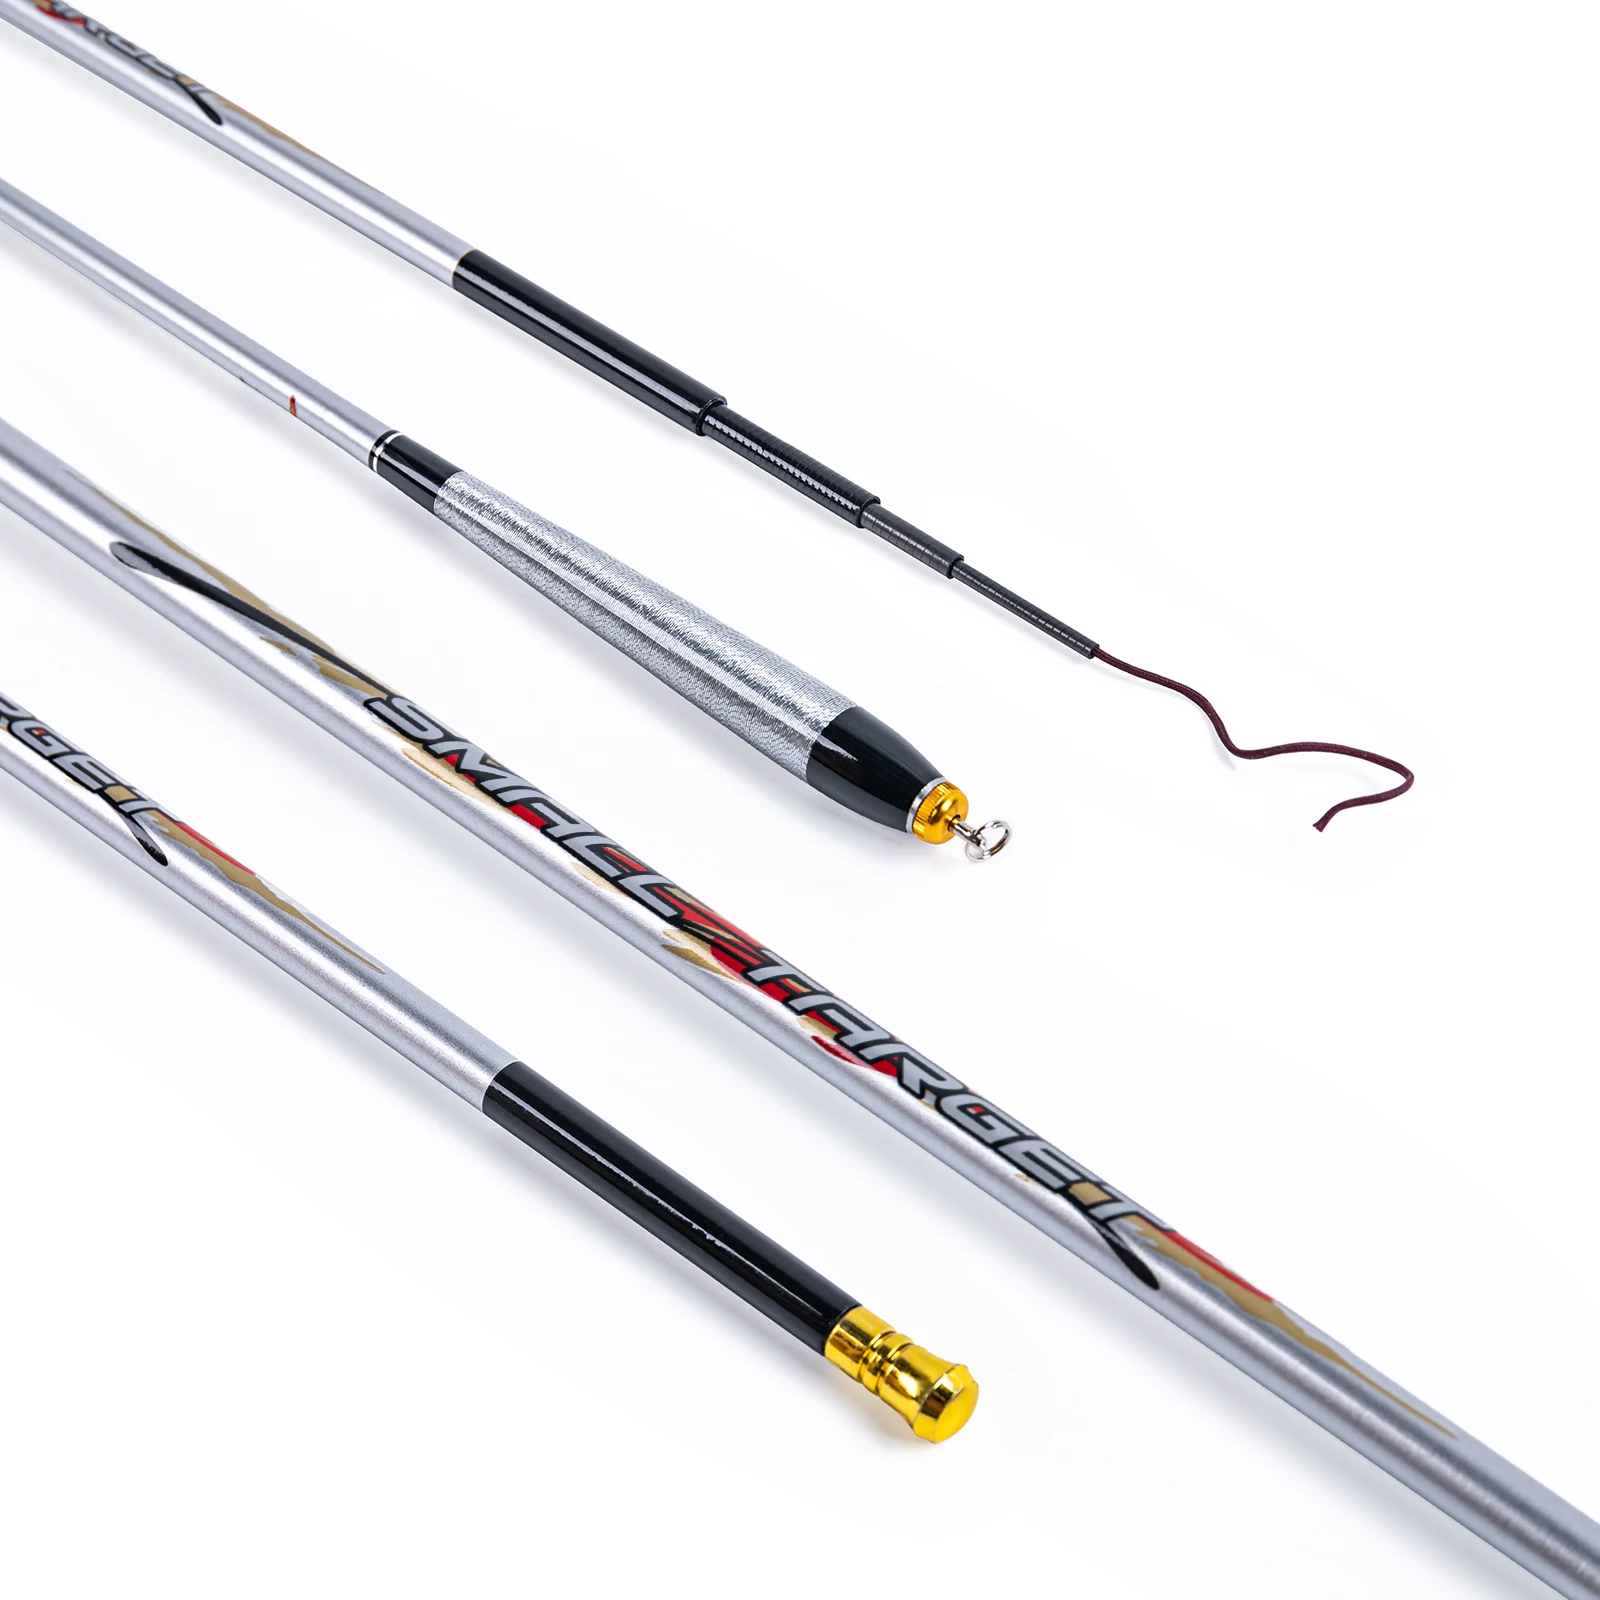 

Goture SMRLL TARGET/CARBON Telescopic Fishing Rod 1.8m 2.1m 2.4m 2.7m 3.0m 3.6m Ultralight Portable Pole For Stream Pond Fishing